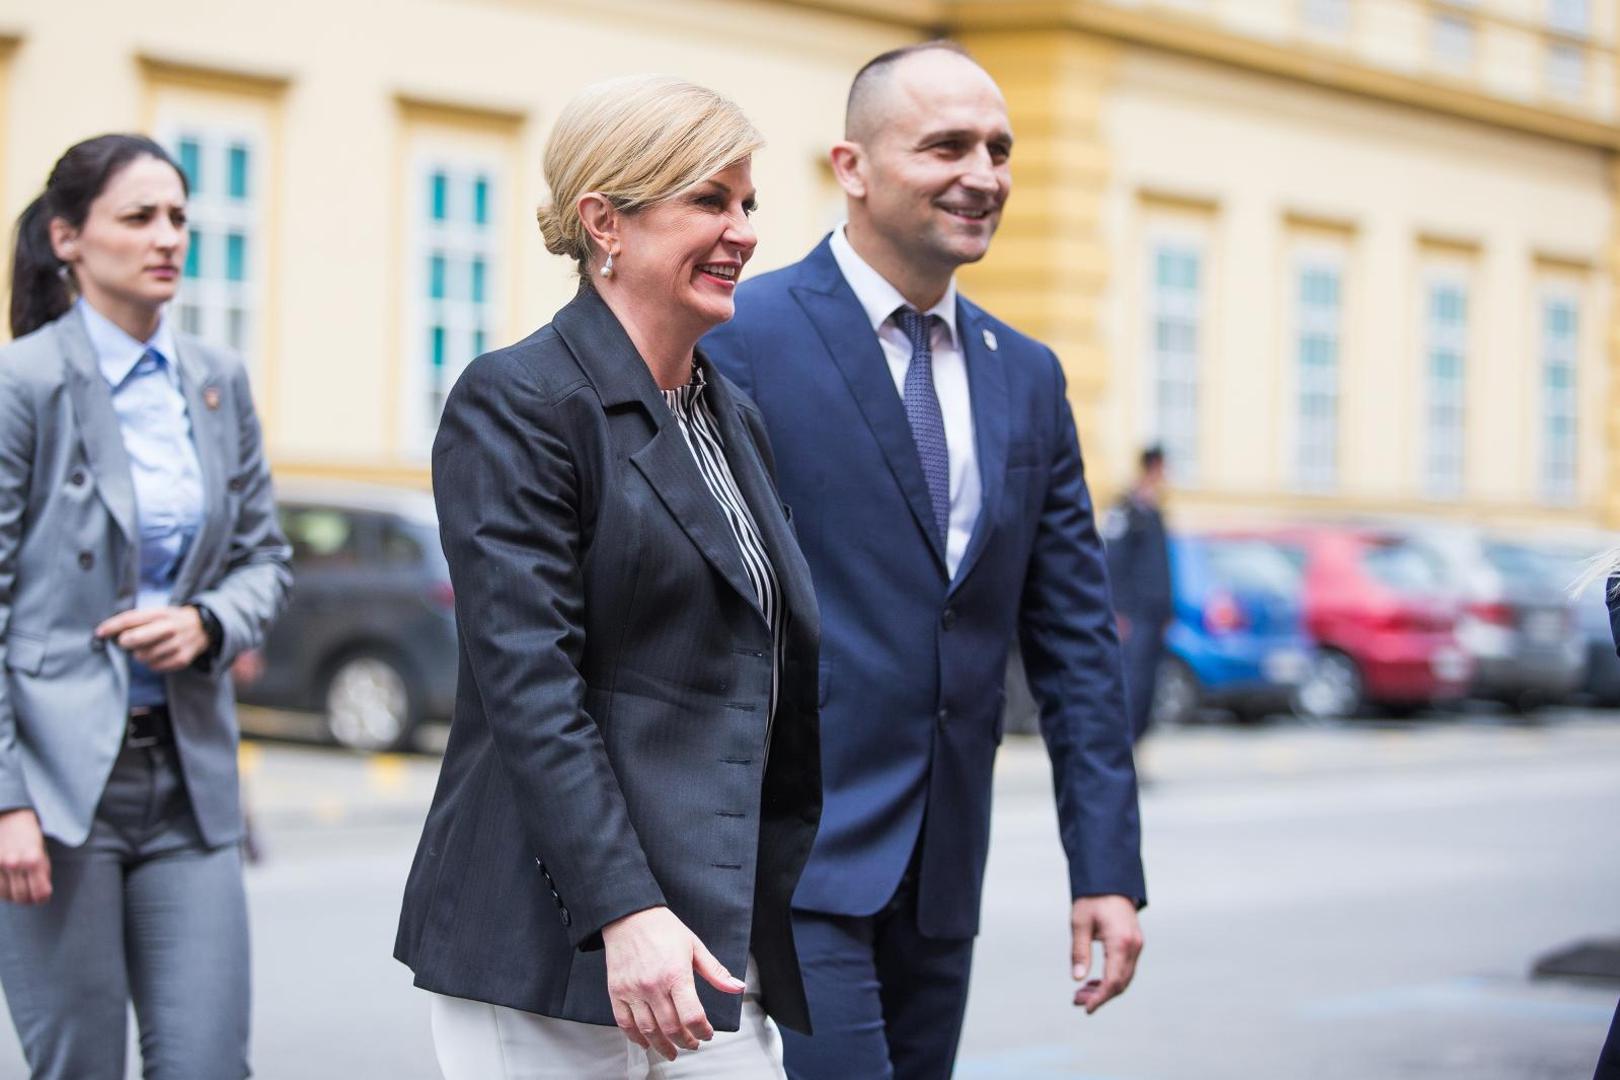 ŠEF STOŽERA ZA IZBORE
Anušića je izabrala sama predsjednica Kolinda Grabar-Kitarović